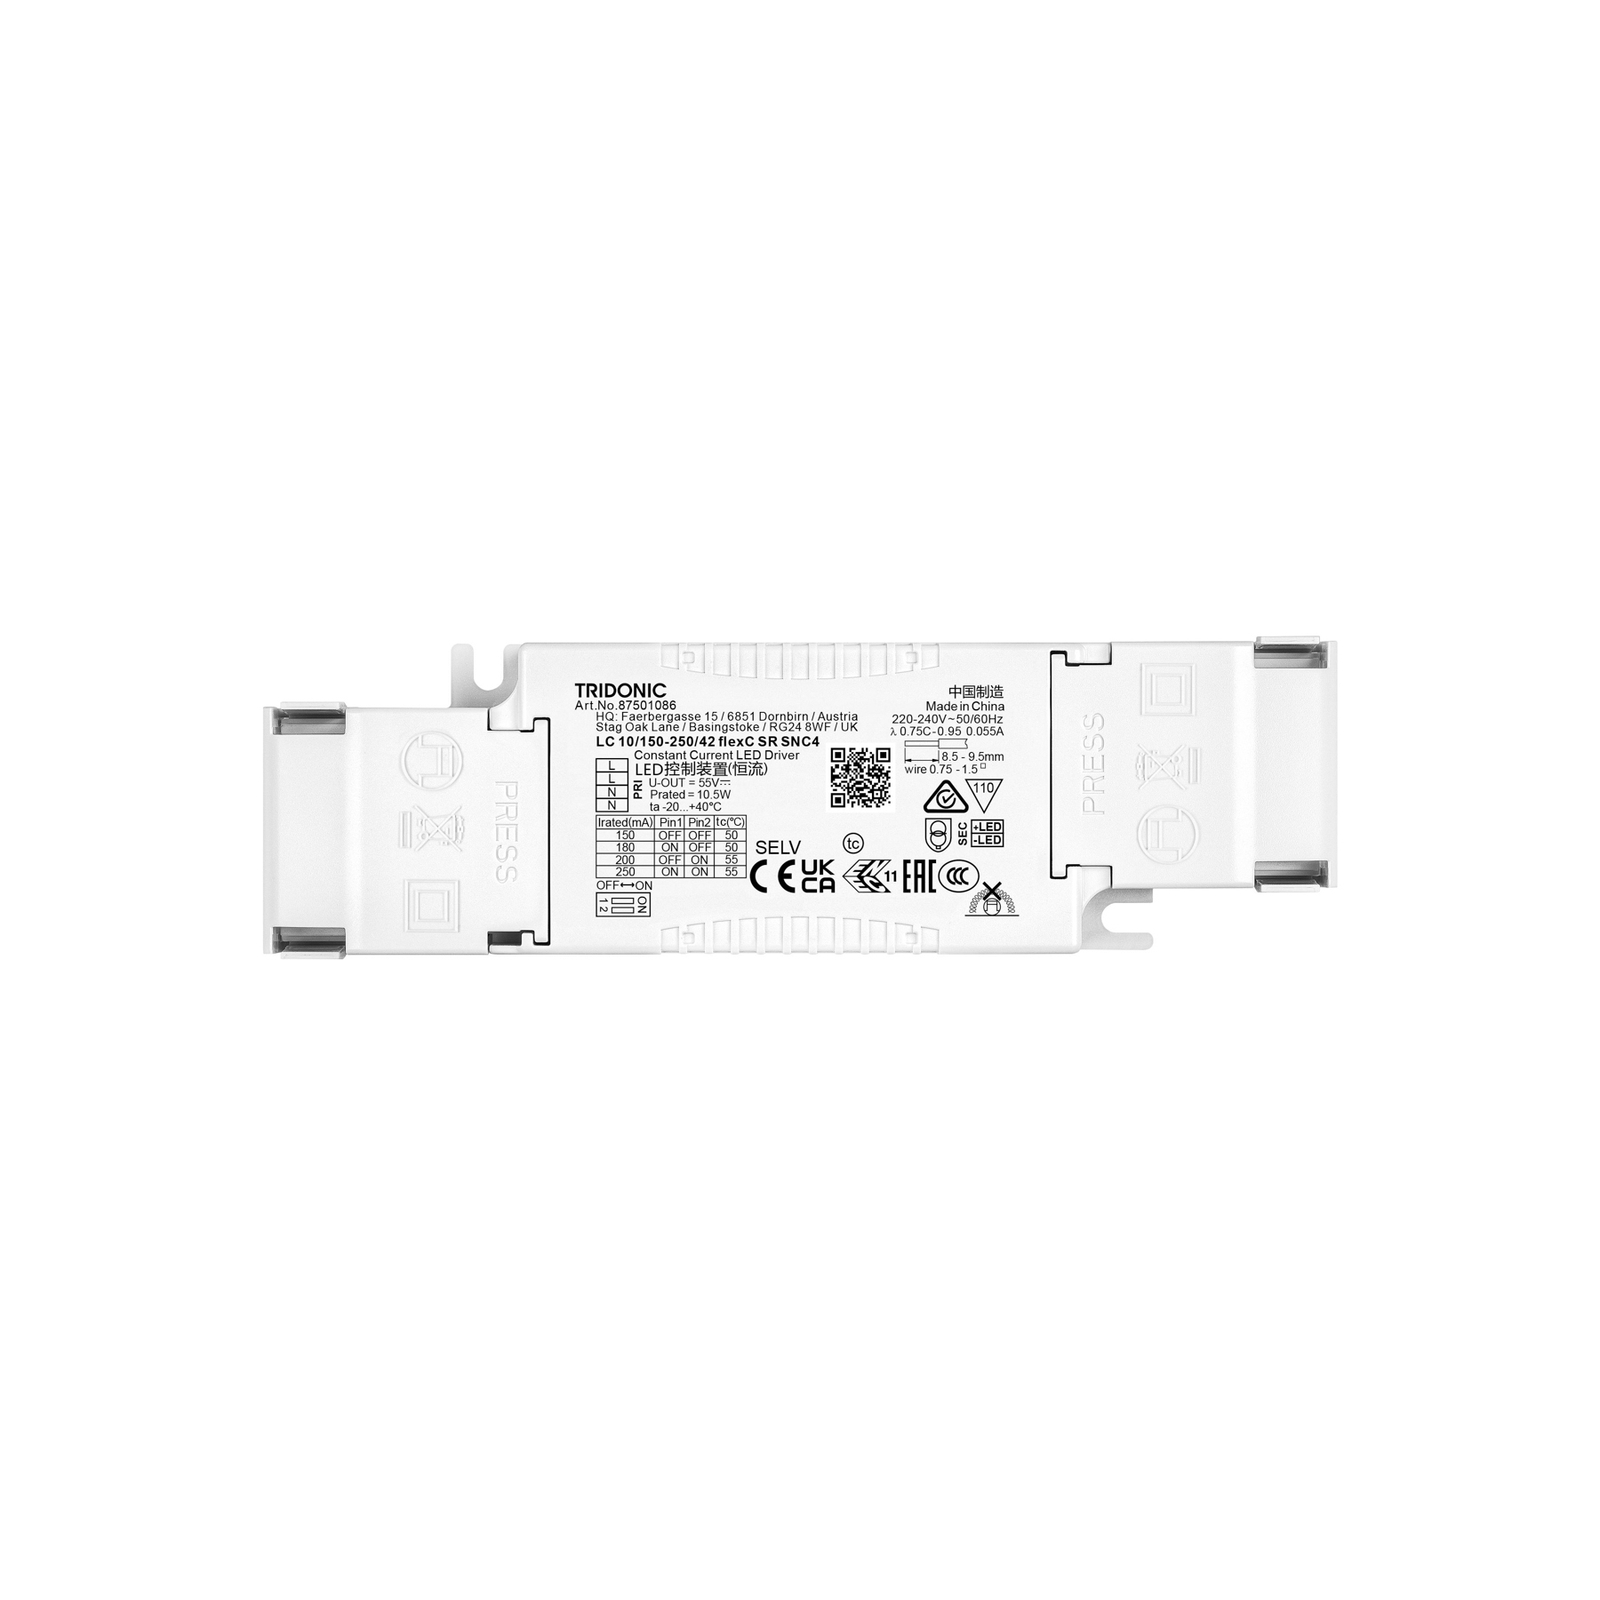 Kompaktní LED ovladač TRIDONIC LC 10/150-250/42 flexC SR SNC4